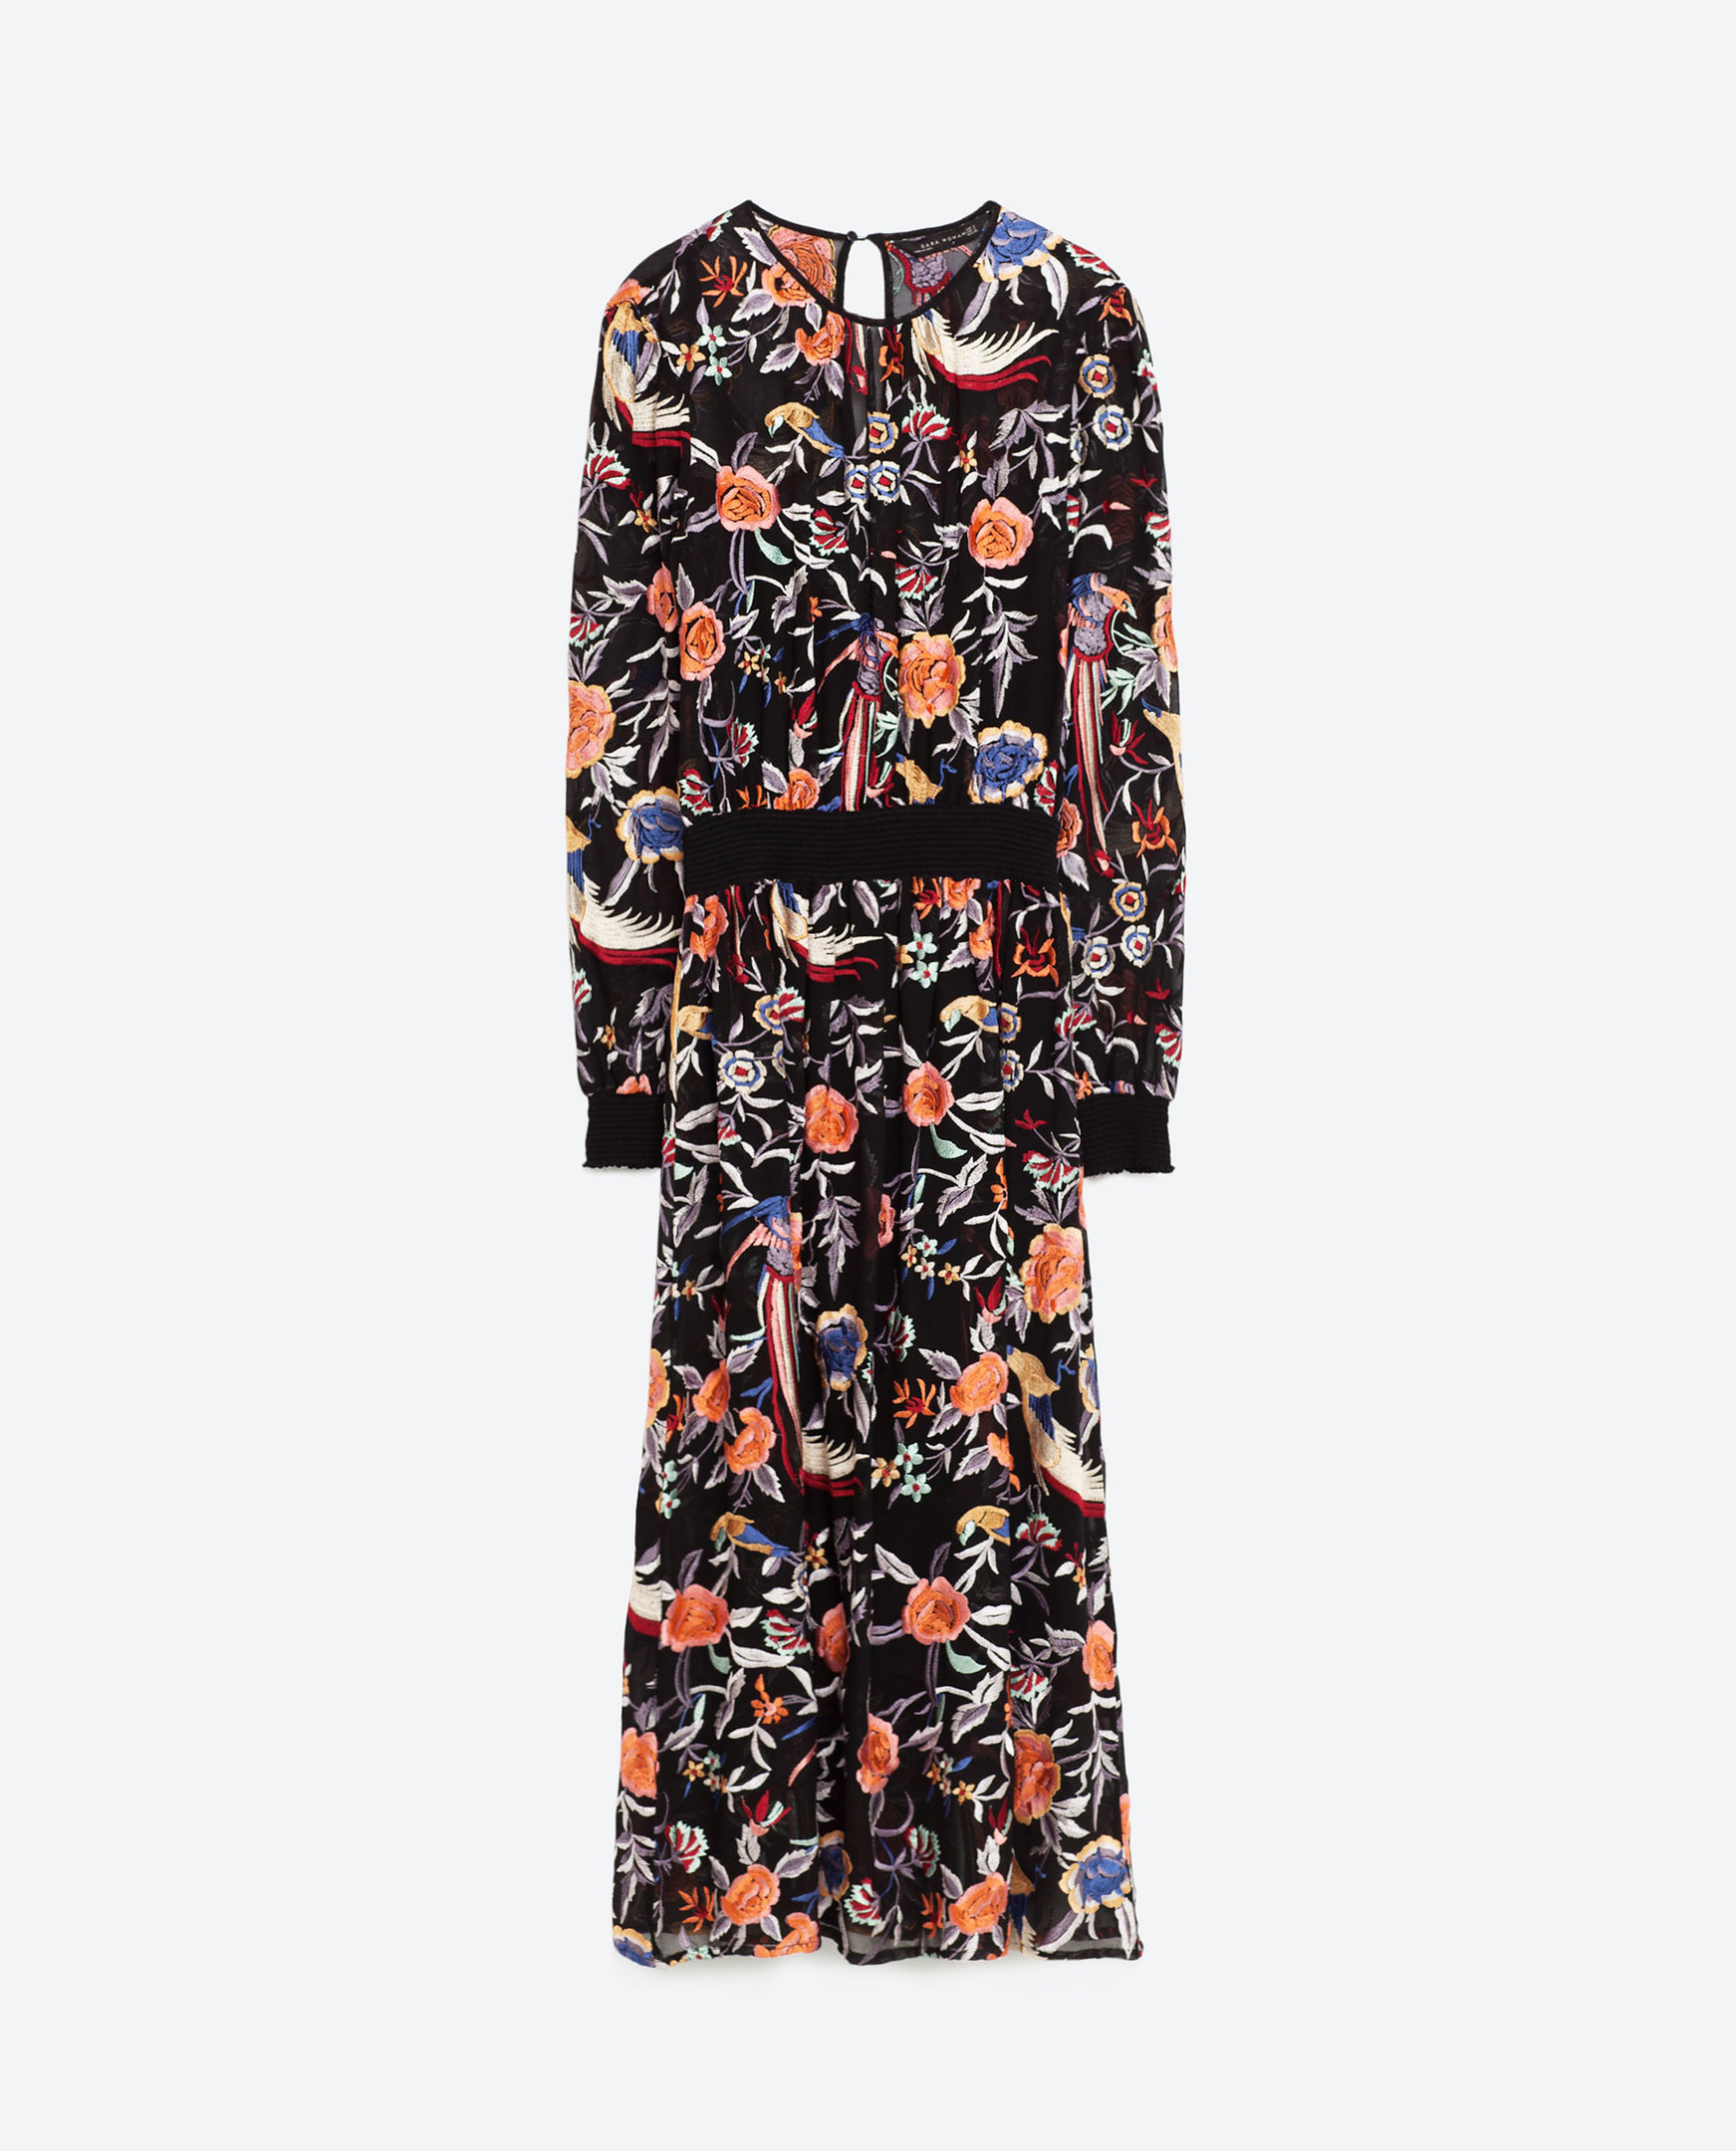 Embroidered dress, £99, Zara